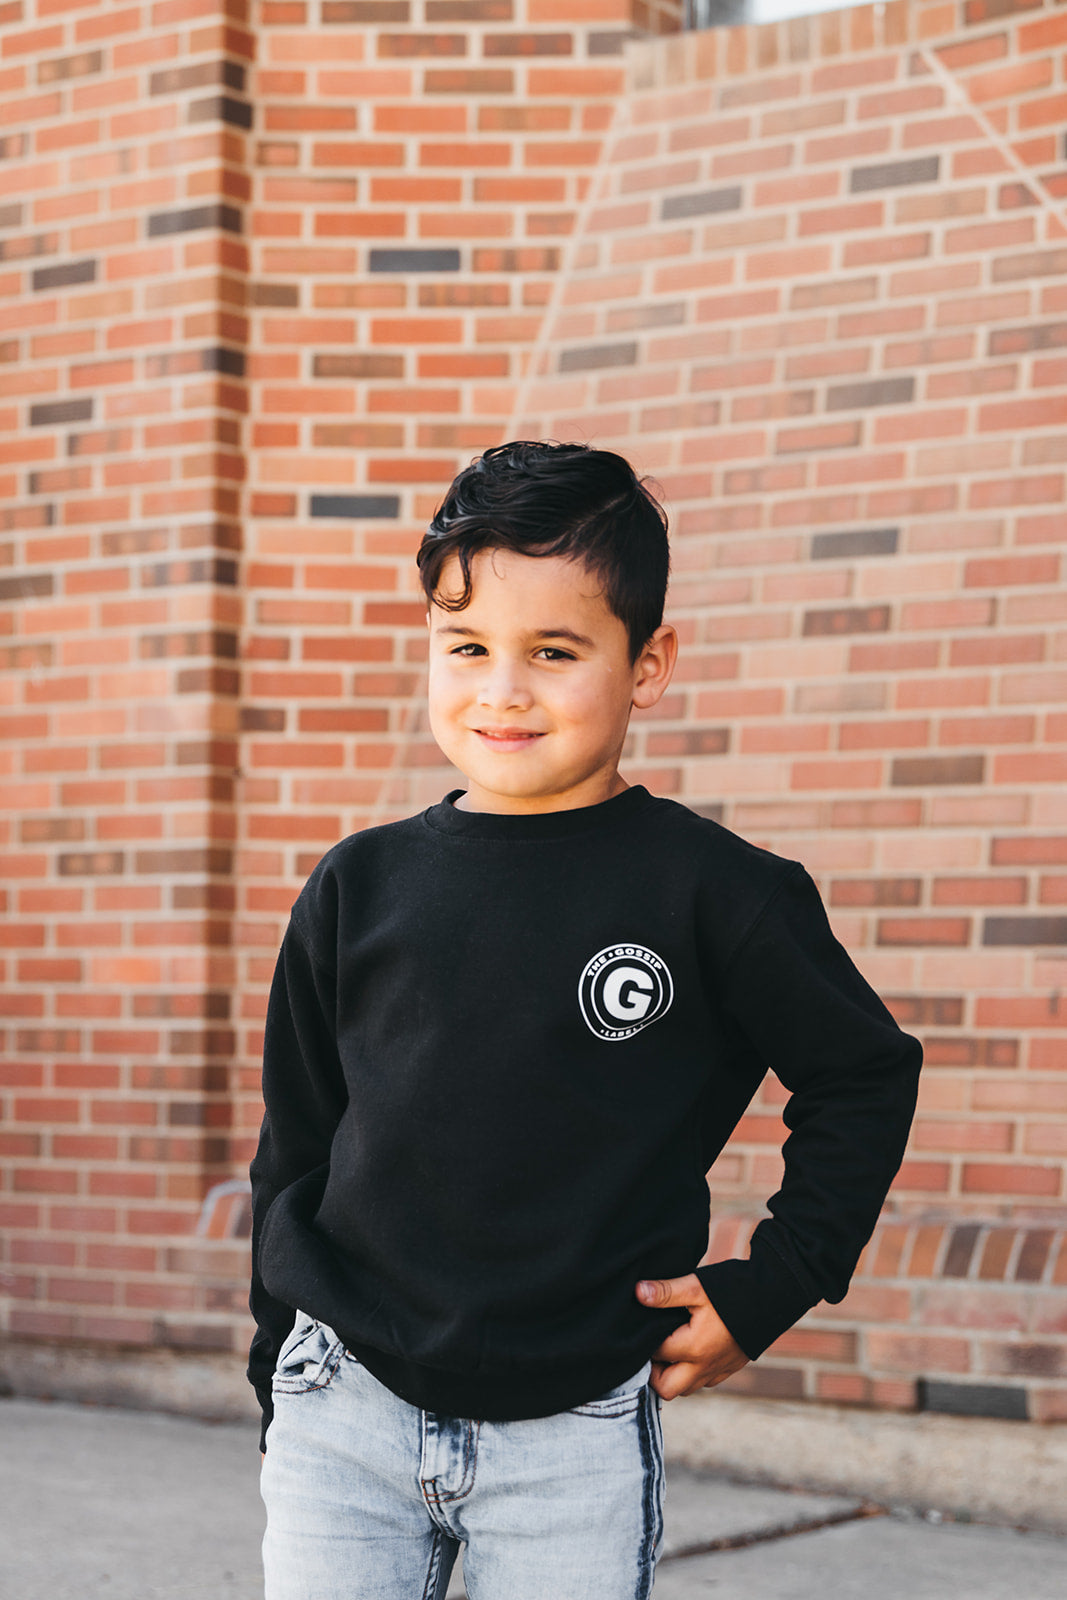 The "G LABEL" Gossip Kids Unisex Crewneck Sweater